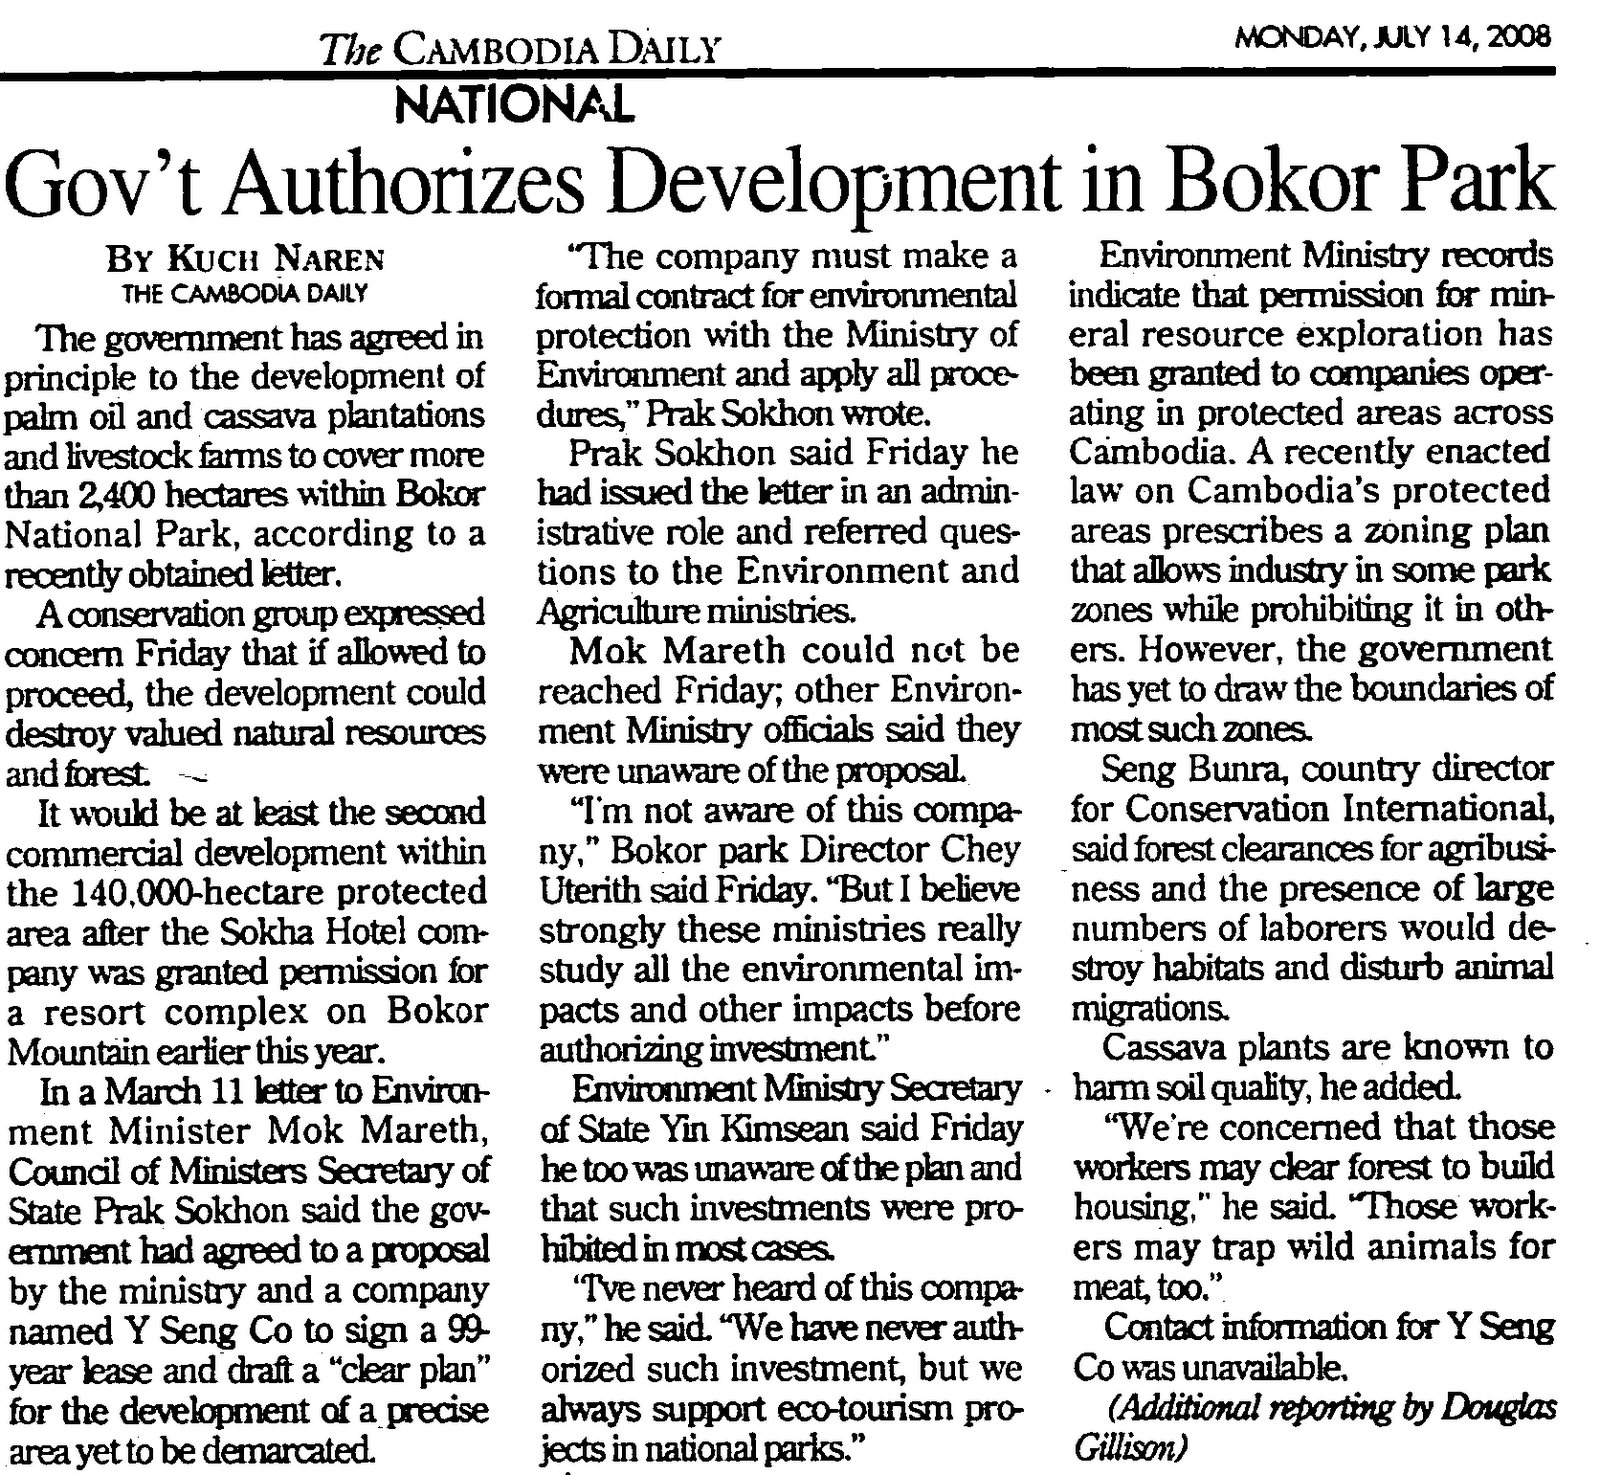 [Government+Authorizes+Bokor+Development.bmp]